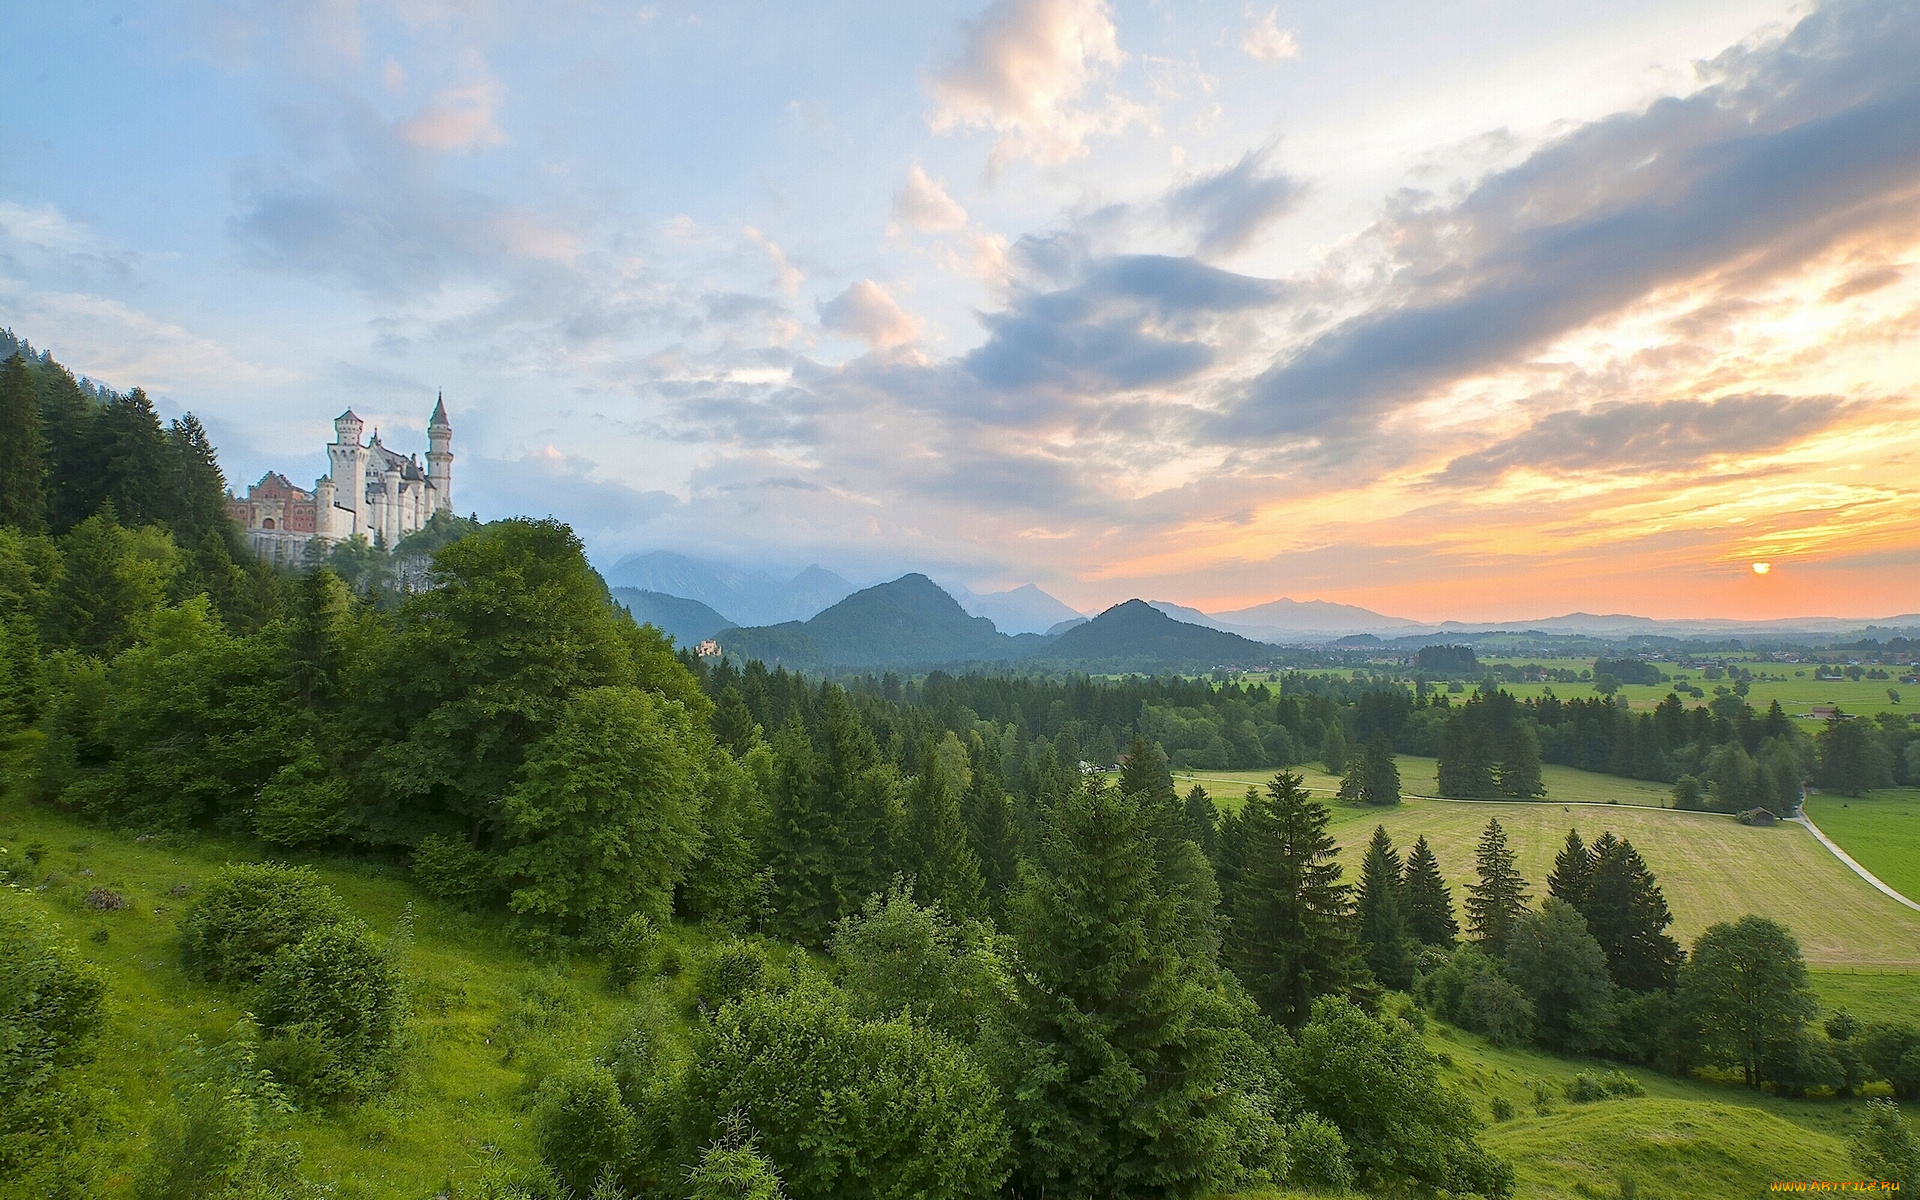 neuschwanstein, castle, bavaria, germany, города, замок, нойшванштайн, германия, бавария, поля, панорама, закат, лес, горы